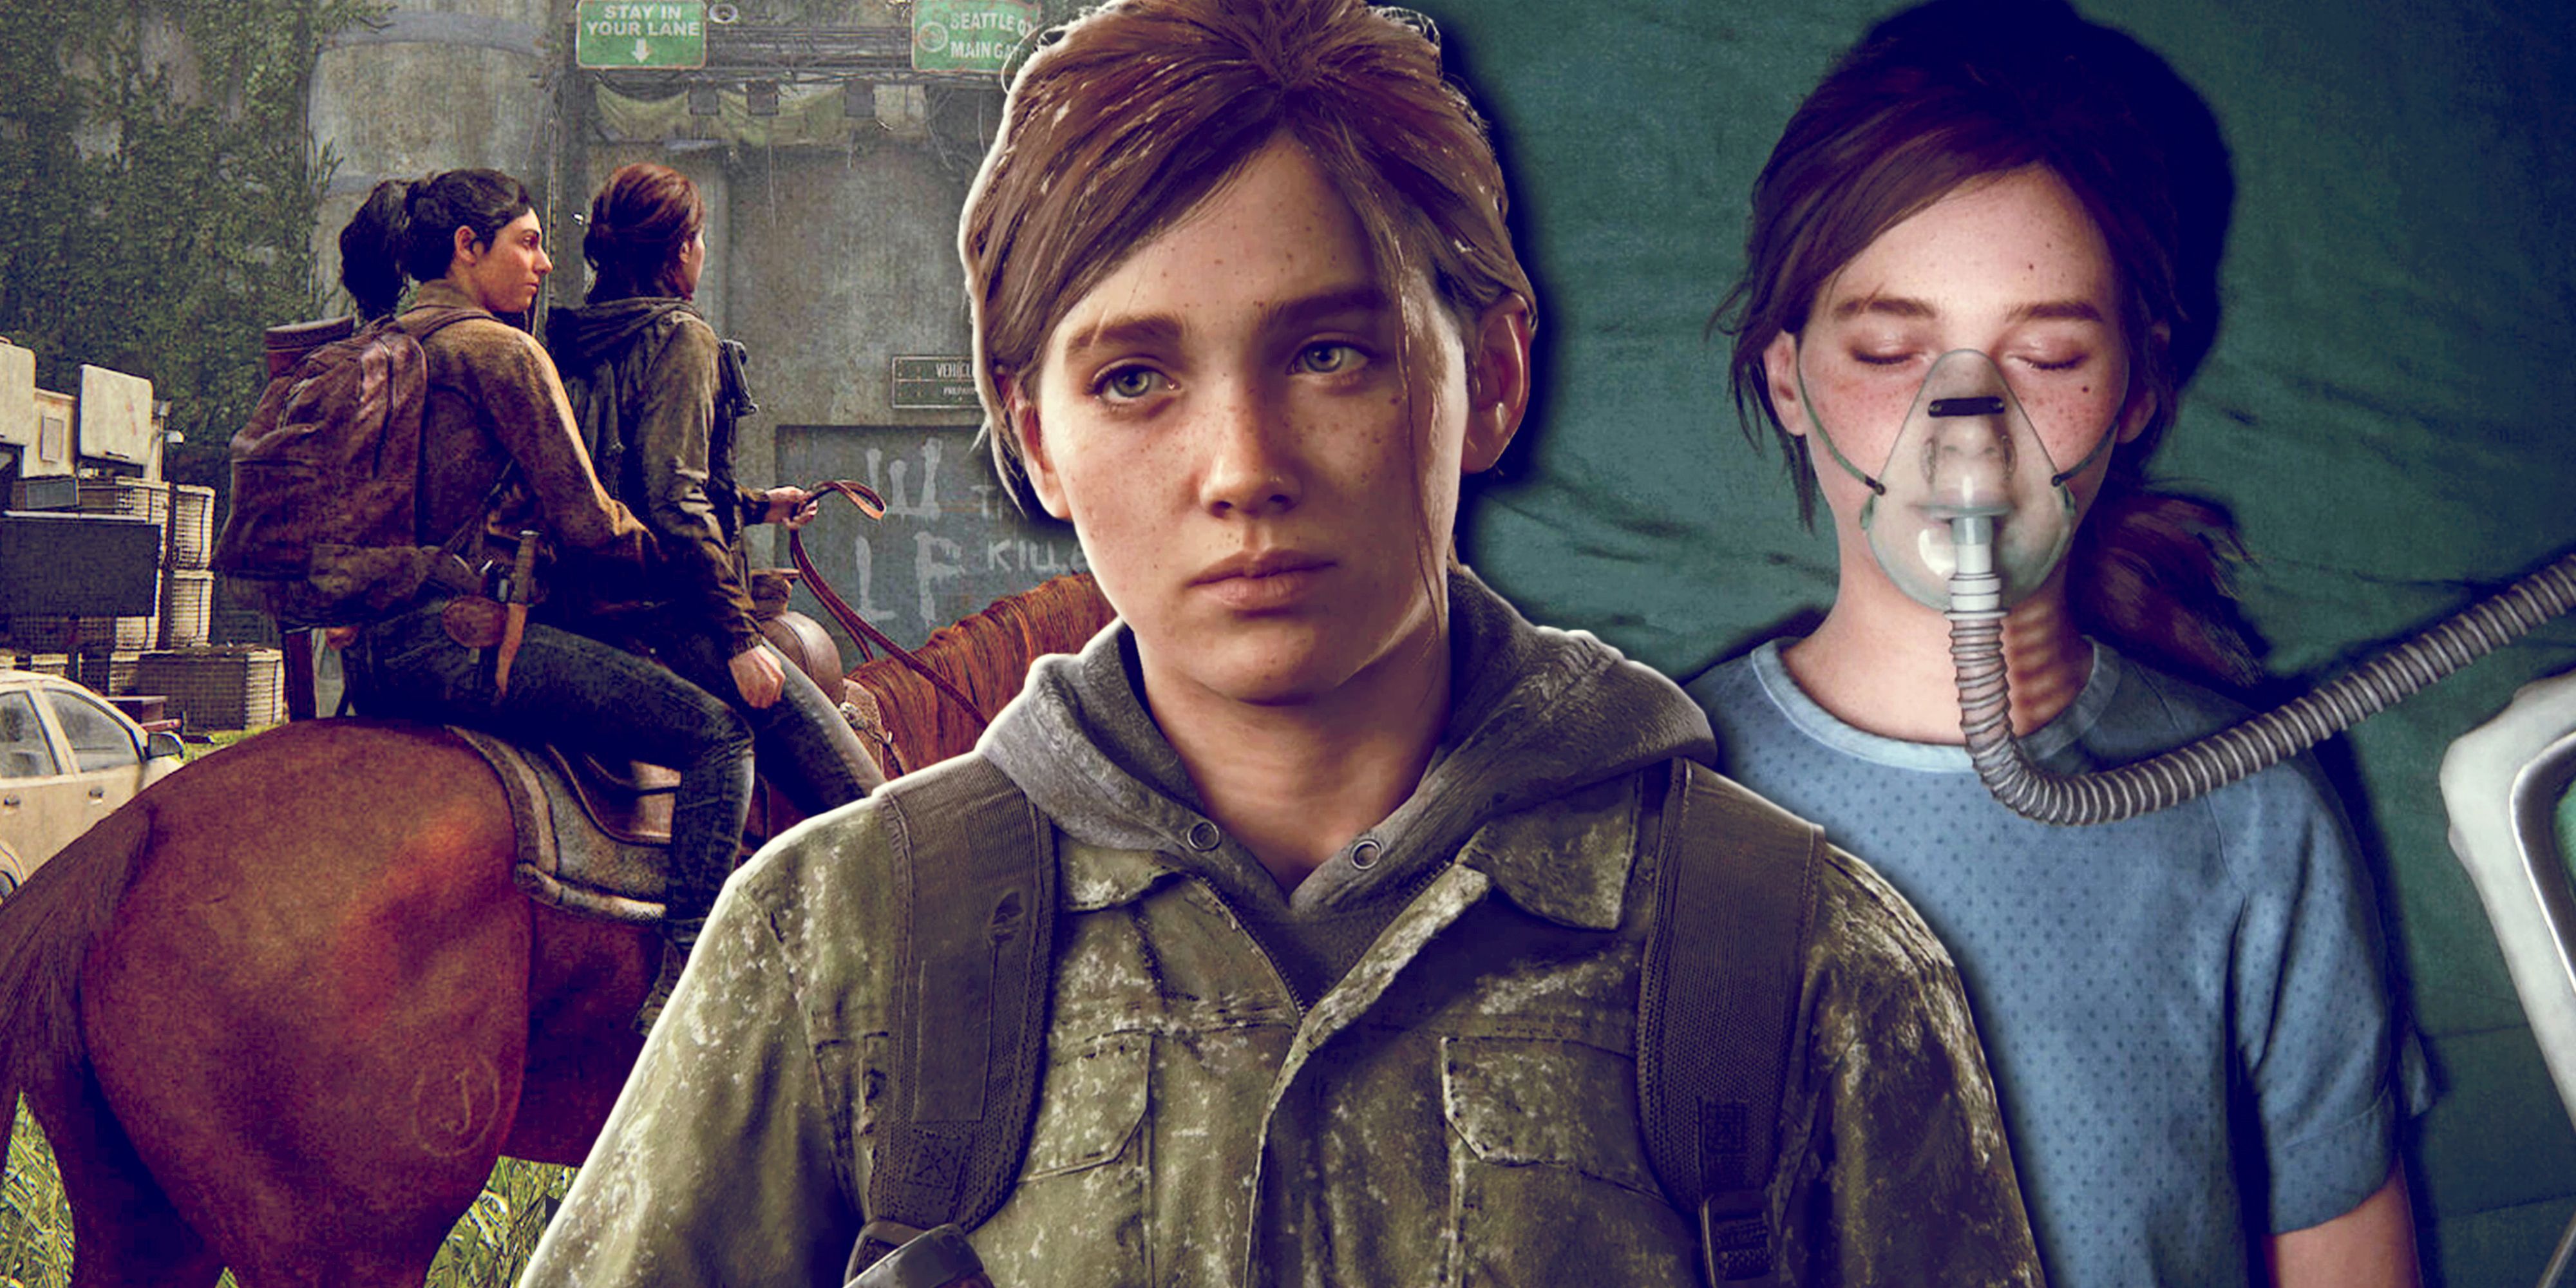 Ellie in The Last of Us Part 2